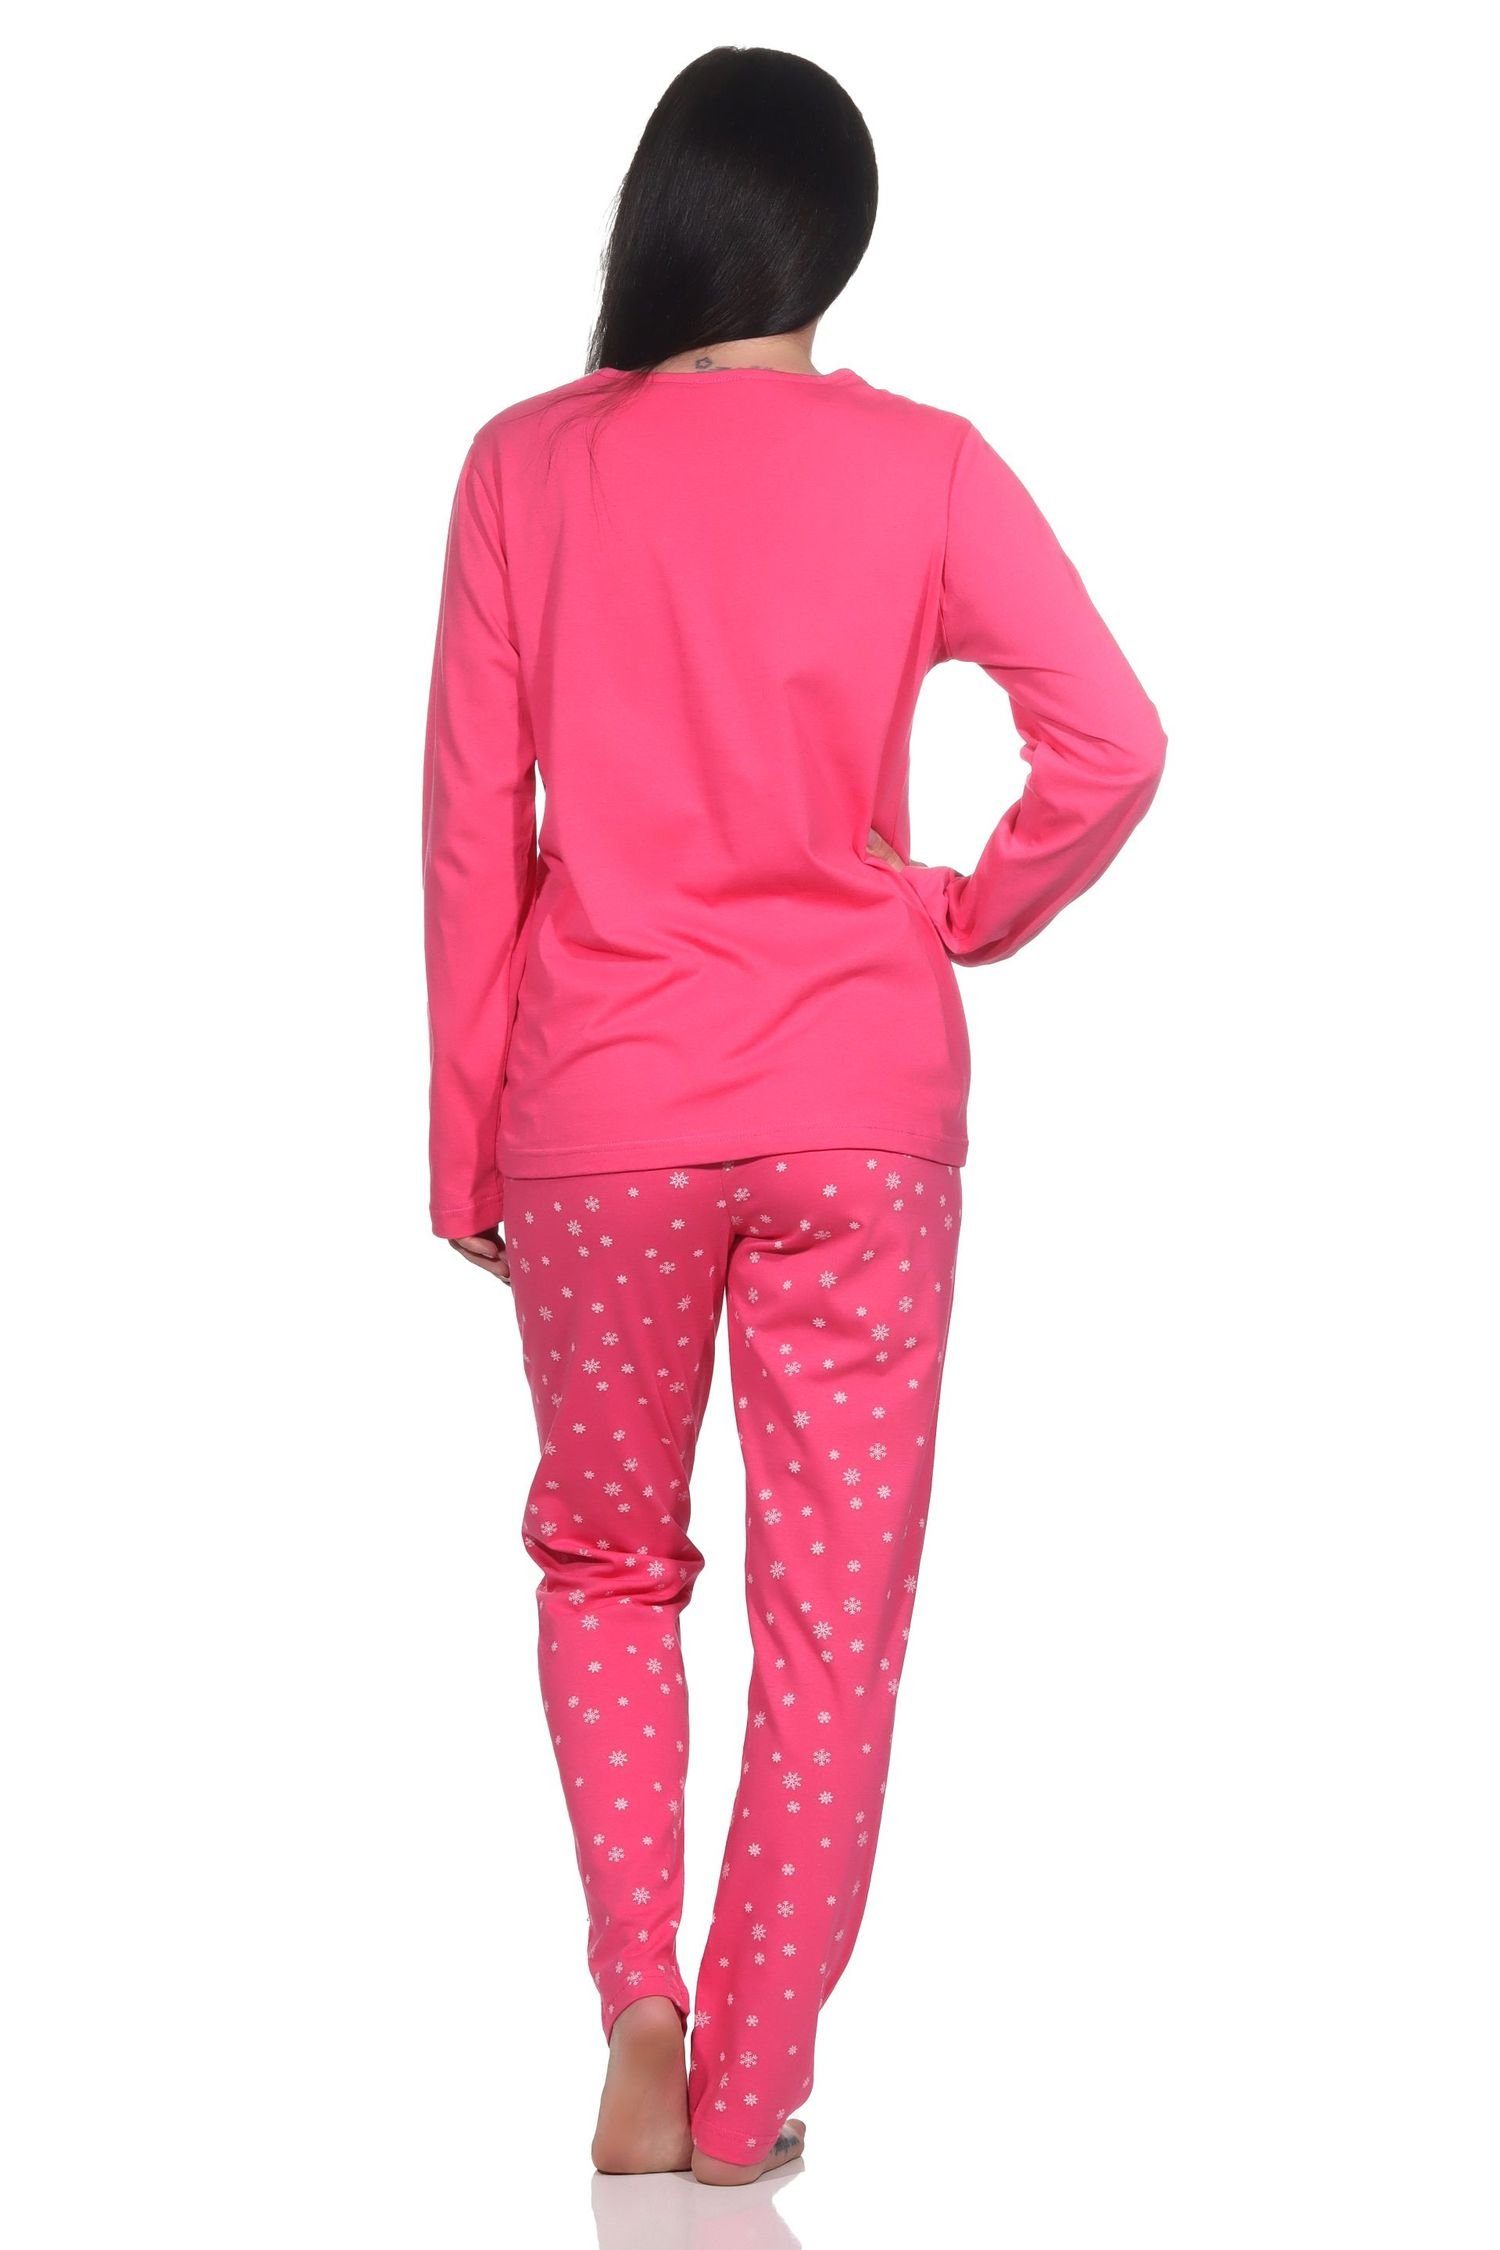 Normann Pyjama Normann in pink langarm Damen Eiskristall Optik Schlafanzug wunderschöner